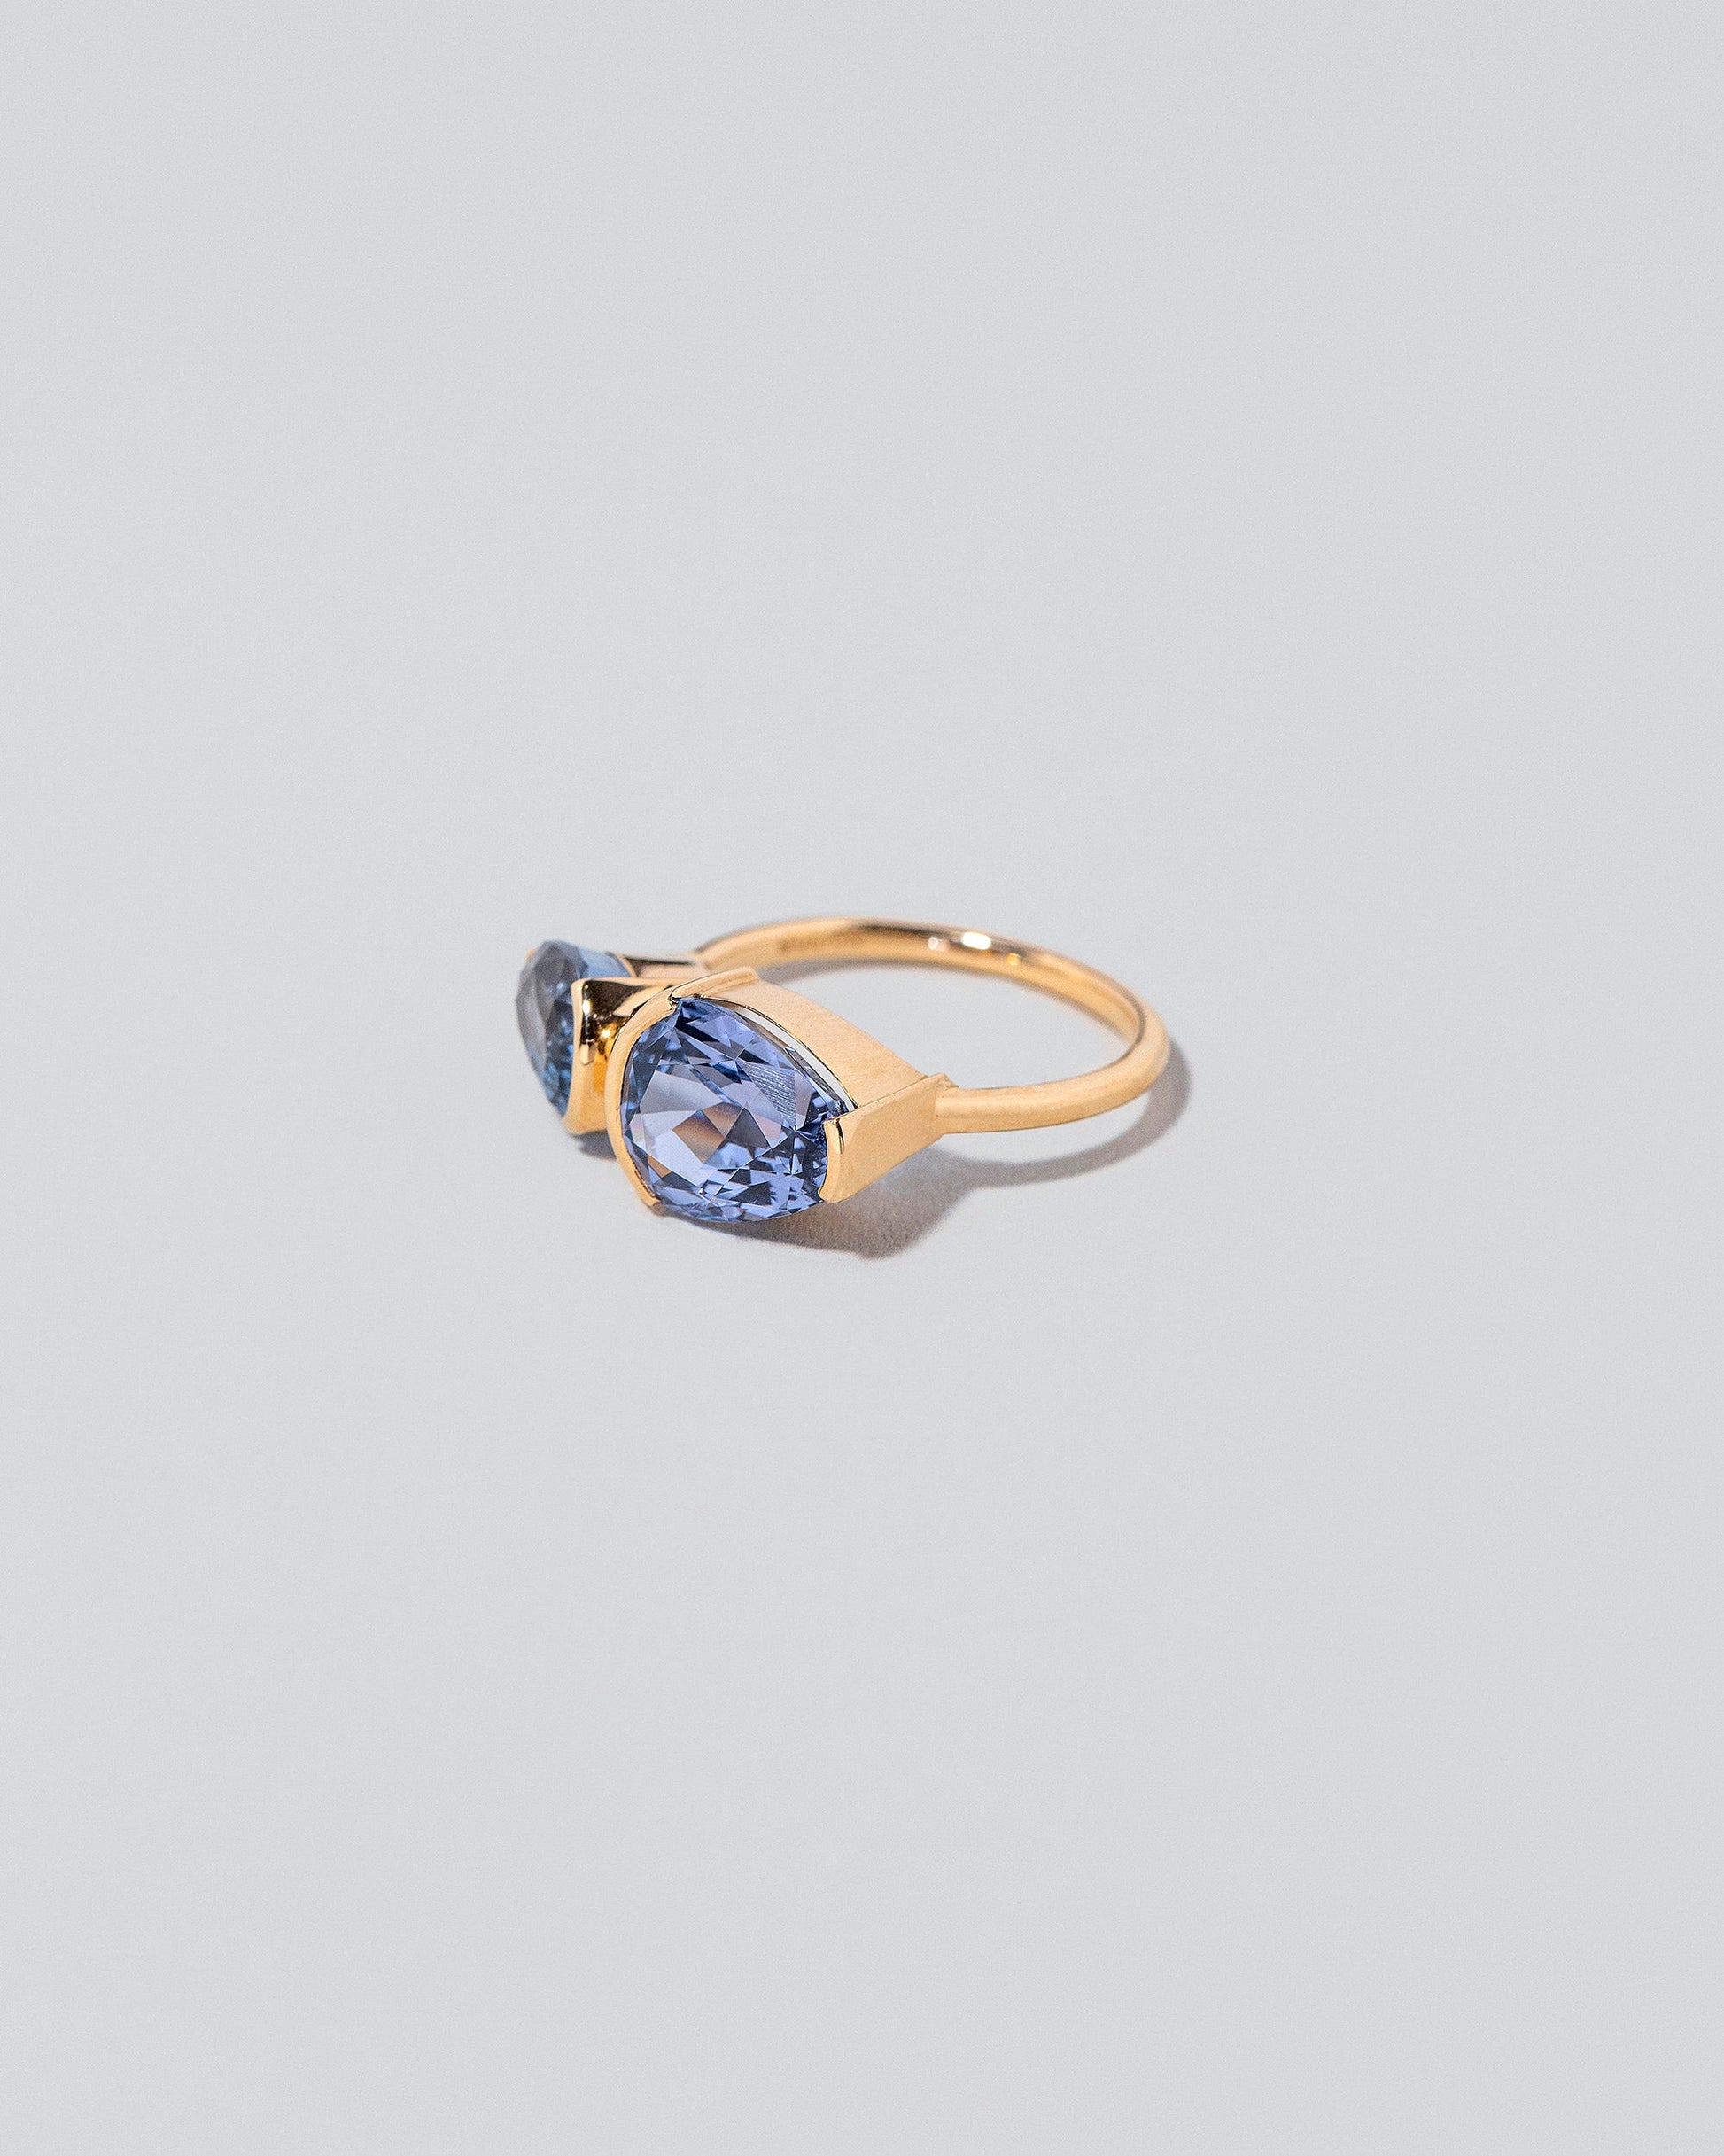  Matsu Ring on light color background.